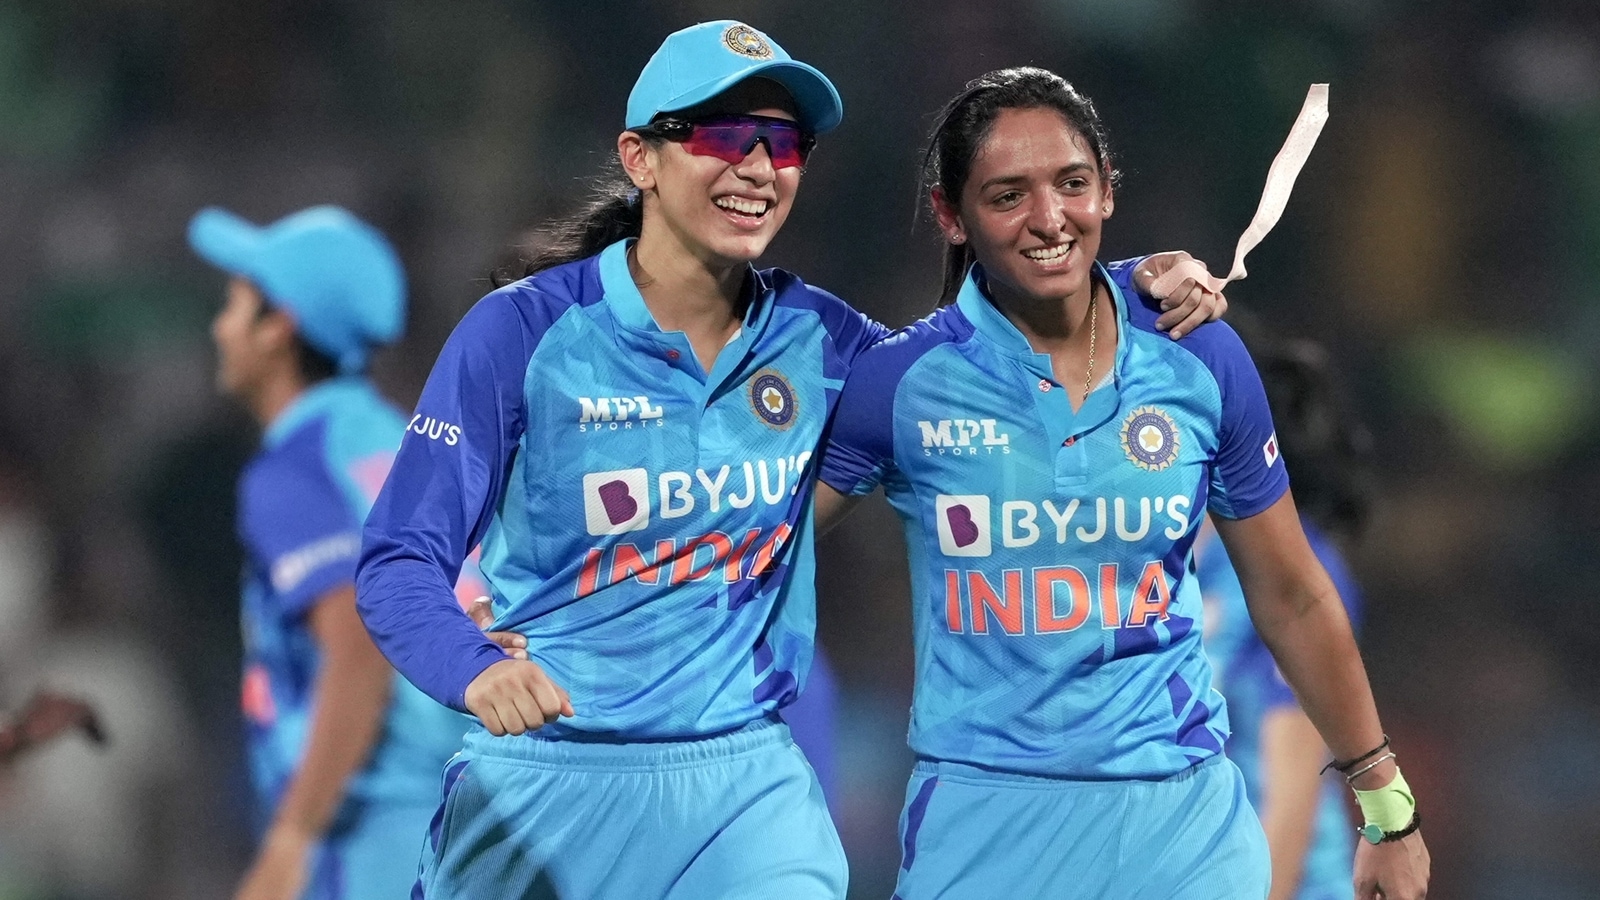 india and australia womens cricket live